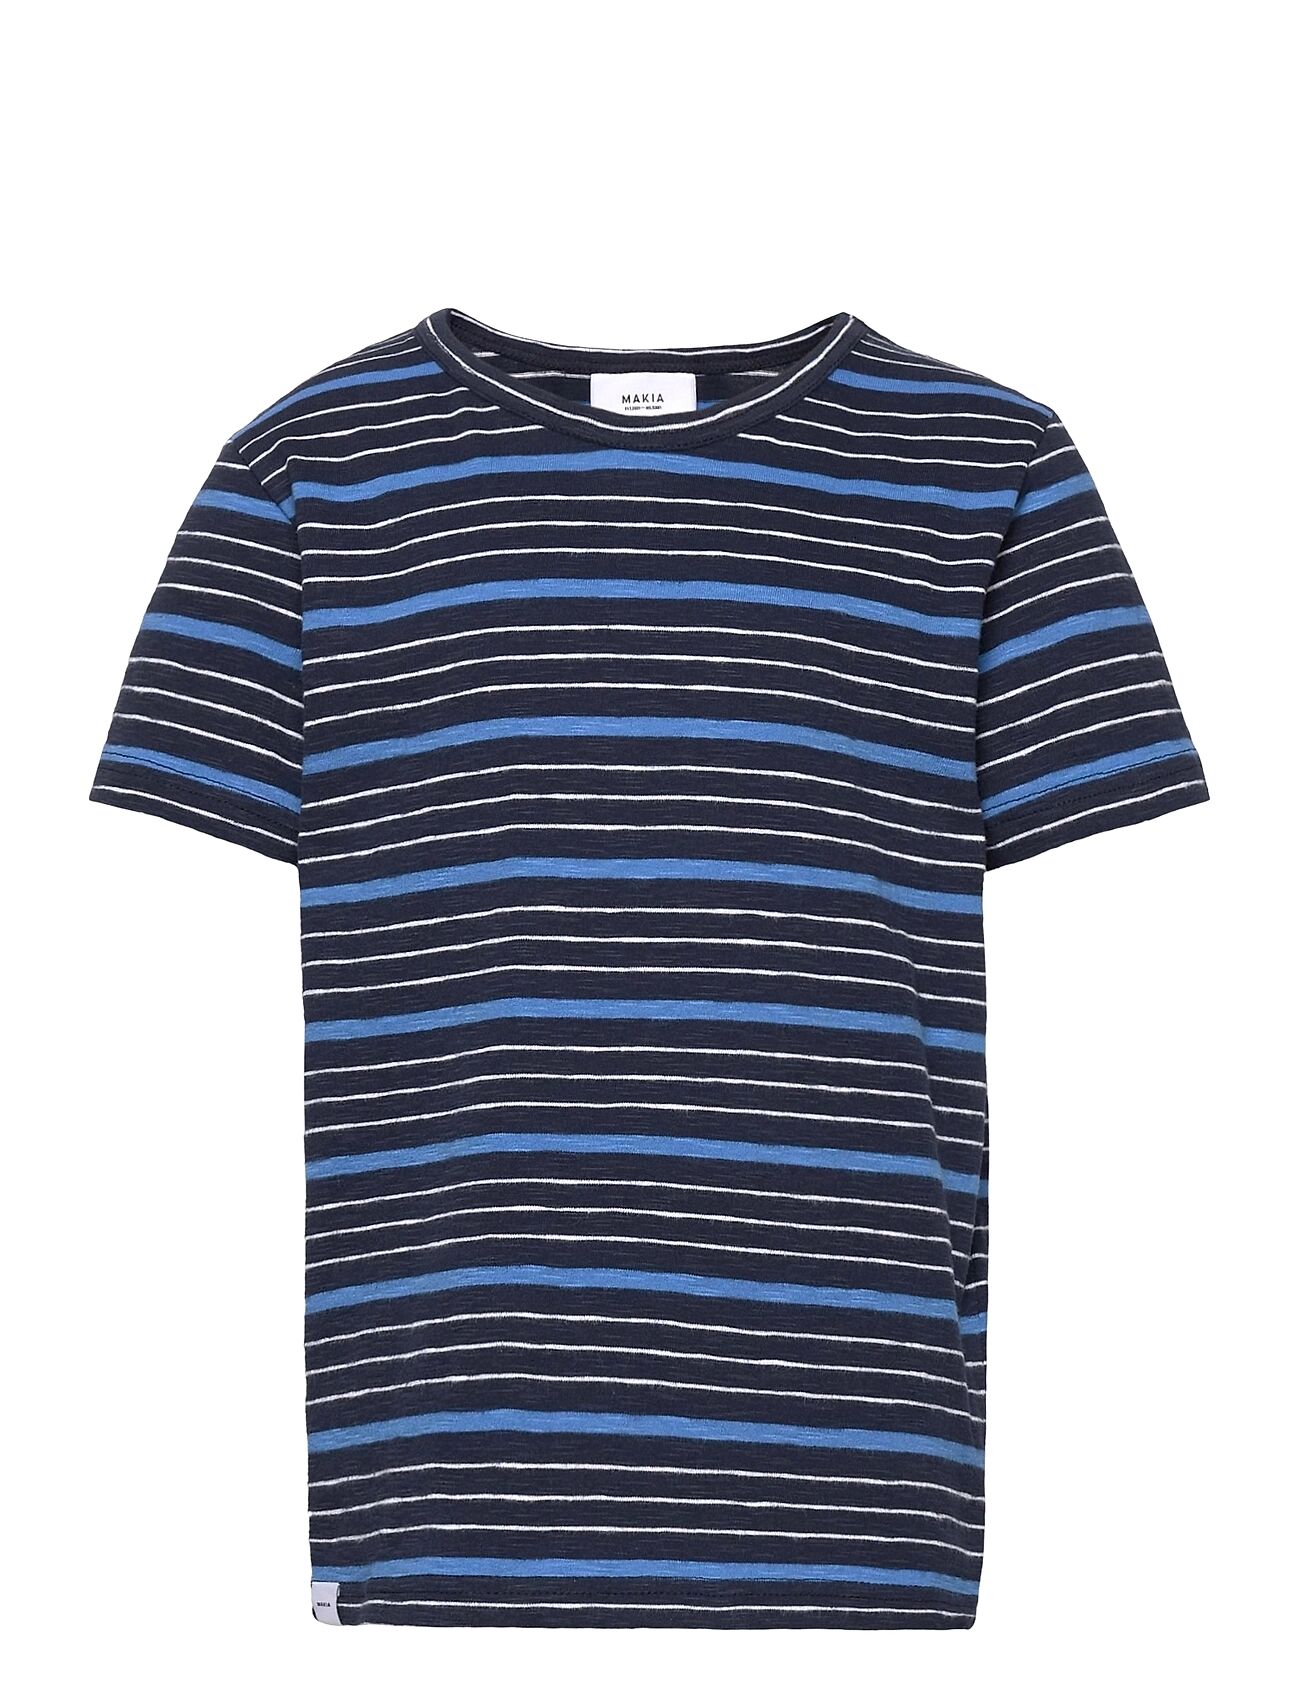 Makia Joshua T-Shirt T-shirts Short-sleeved Multi/mønstret Makia